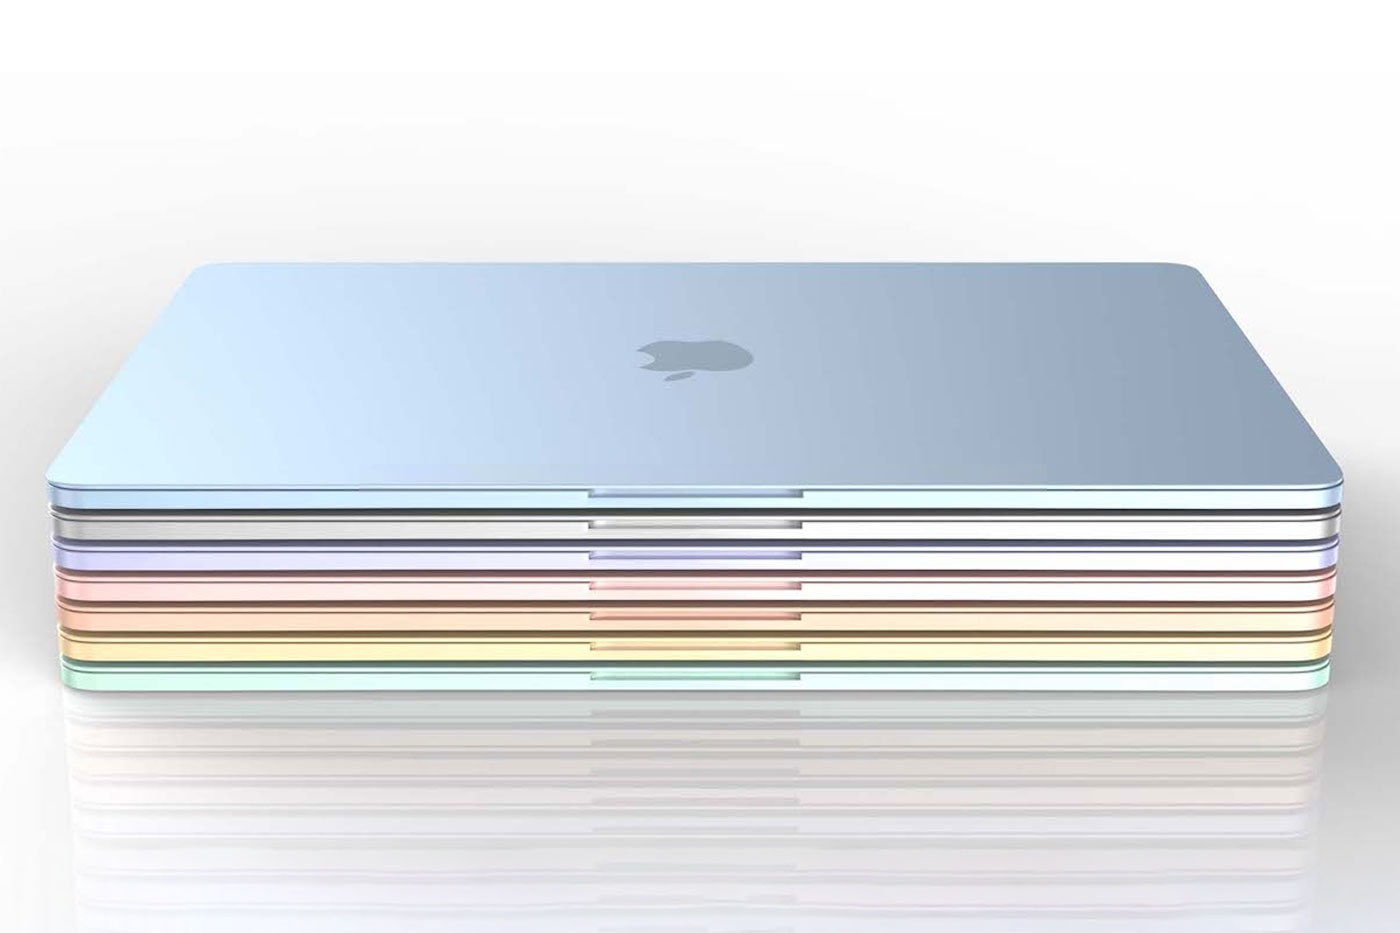 blue apple laptop